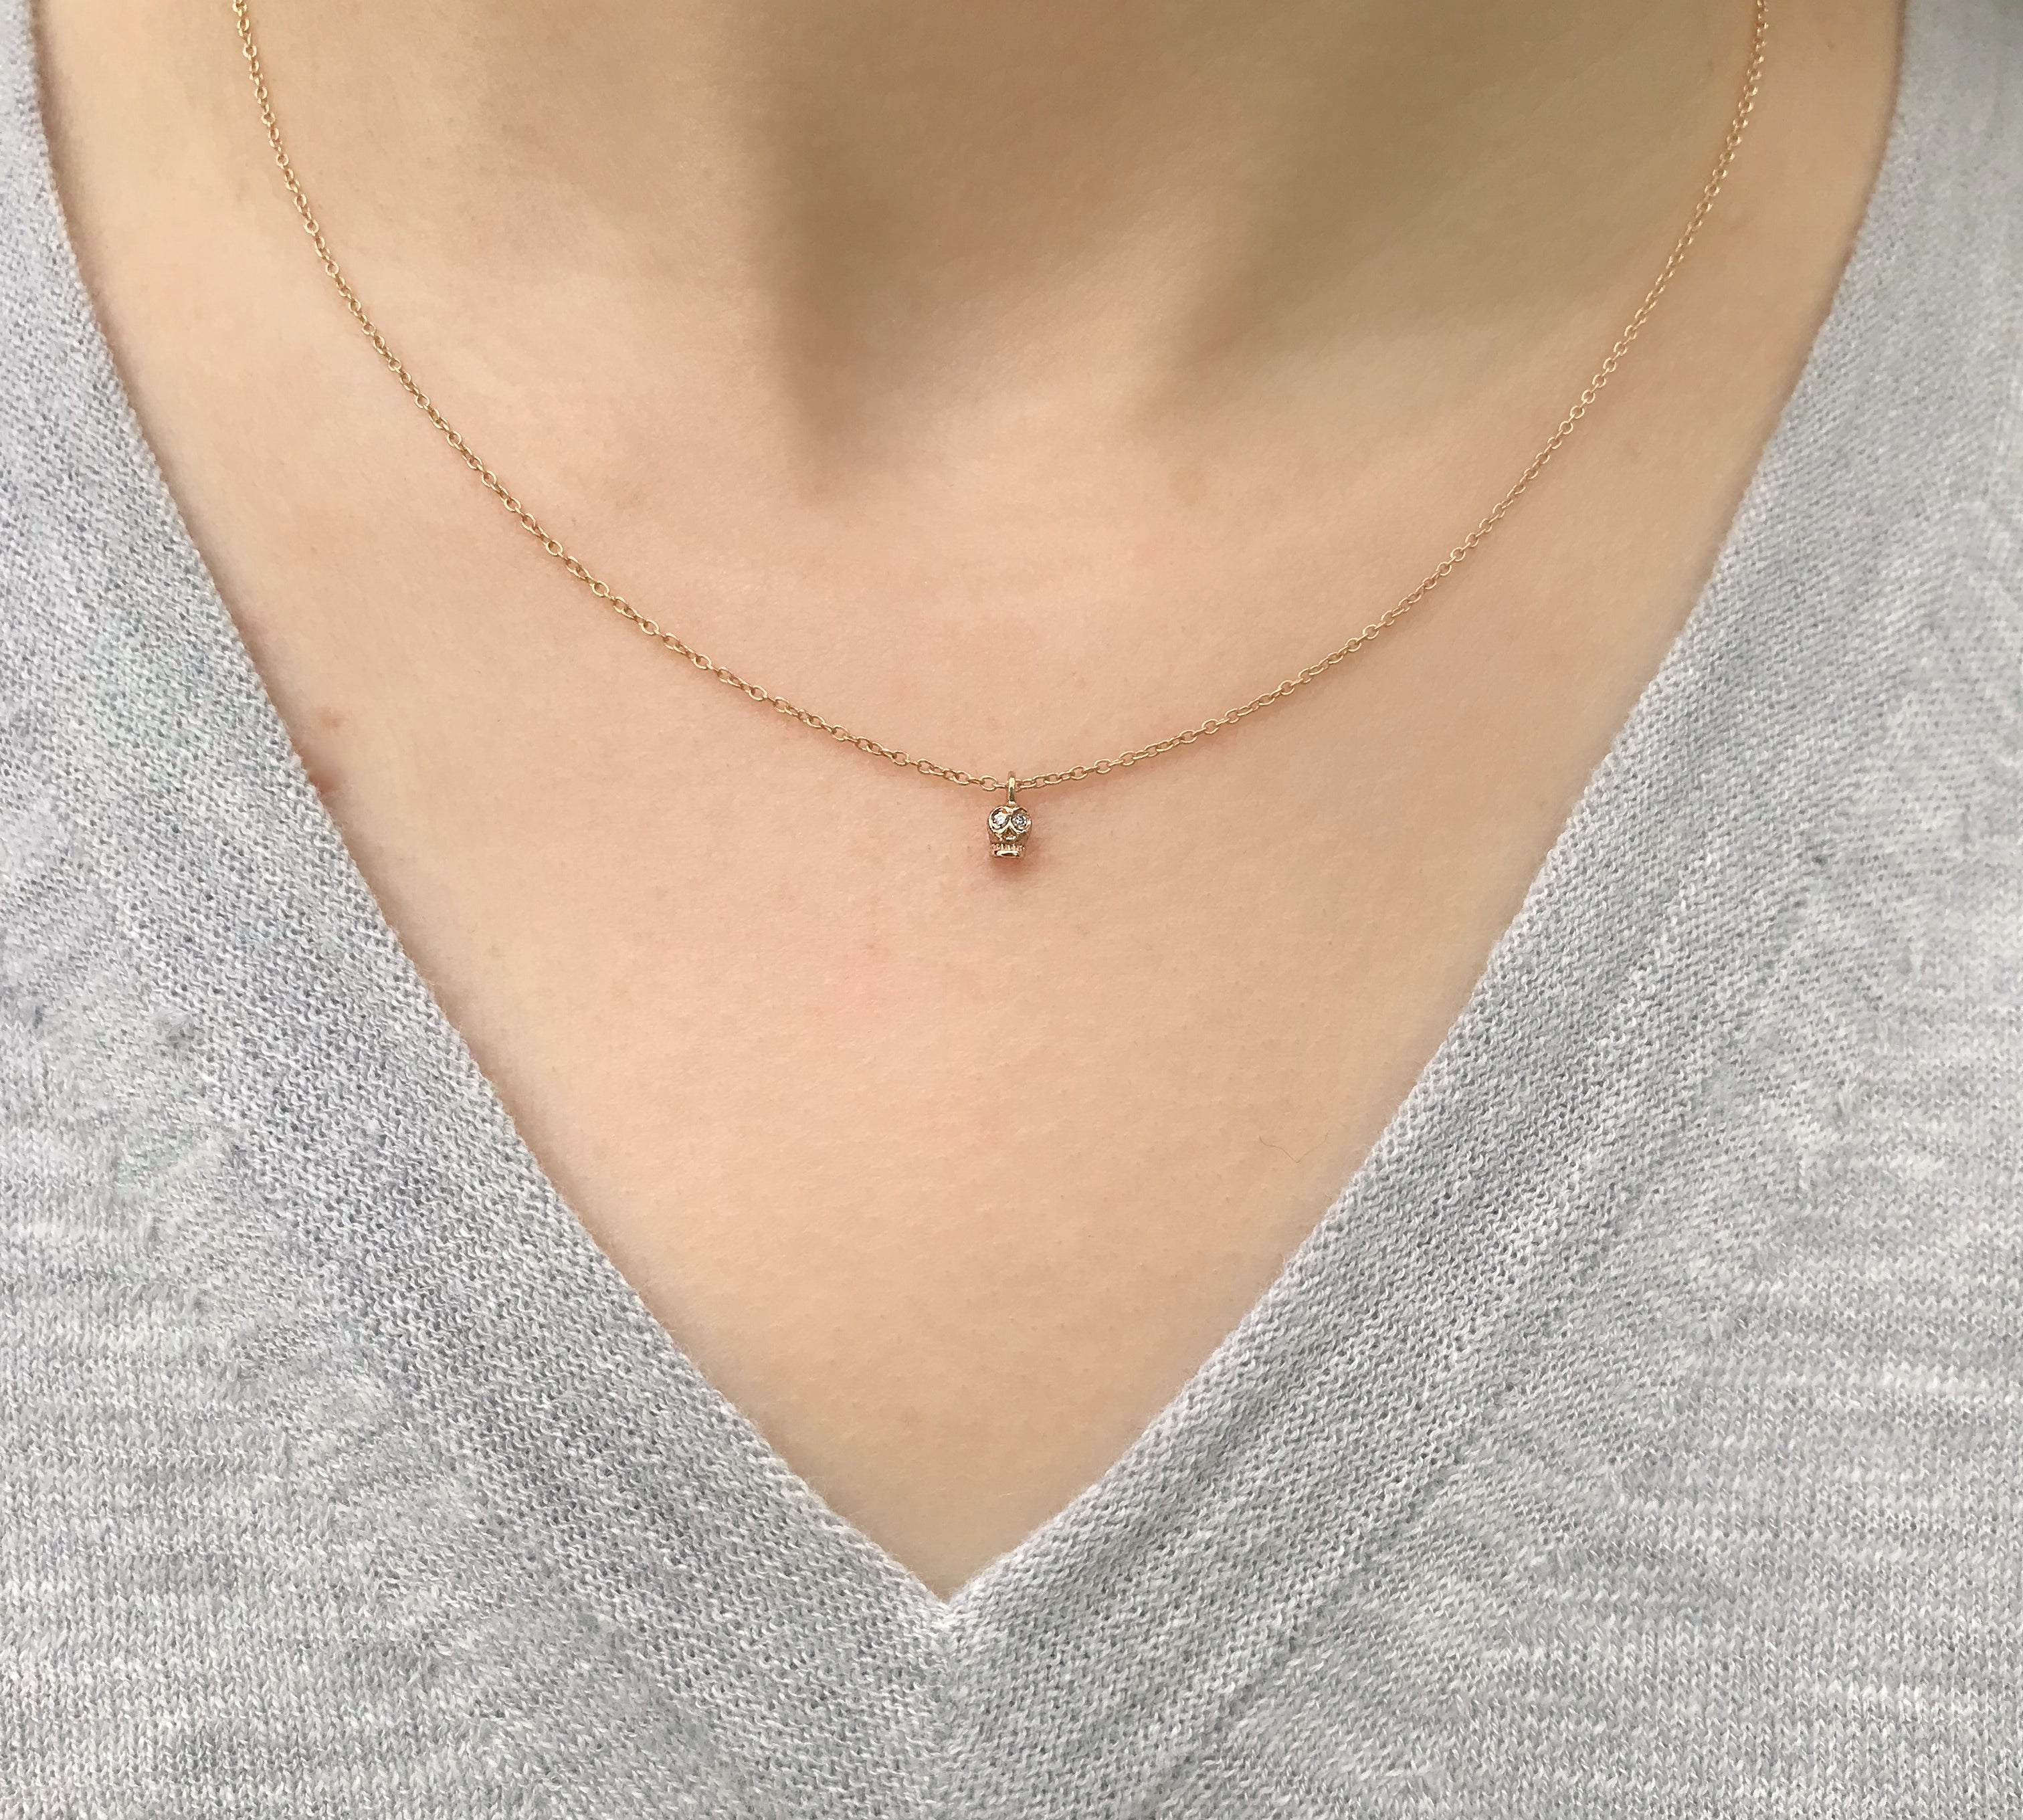 Tiny Skull Necklace, White Diamonds Pendant Jaine K Designs   